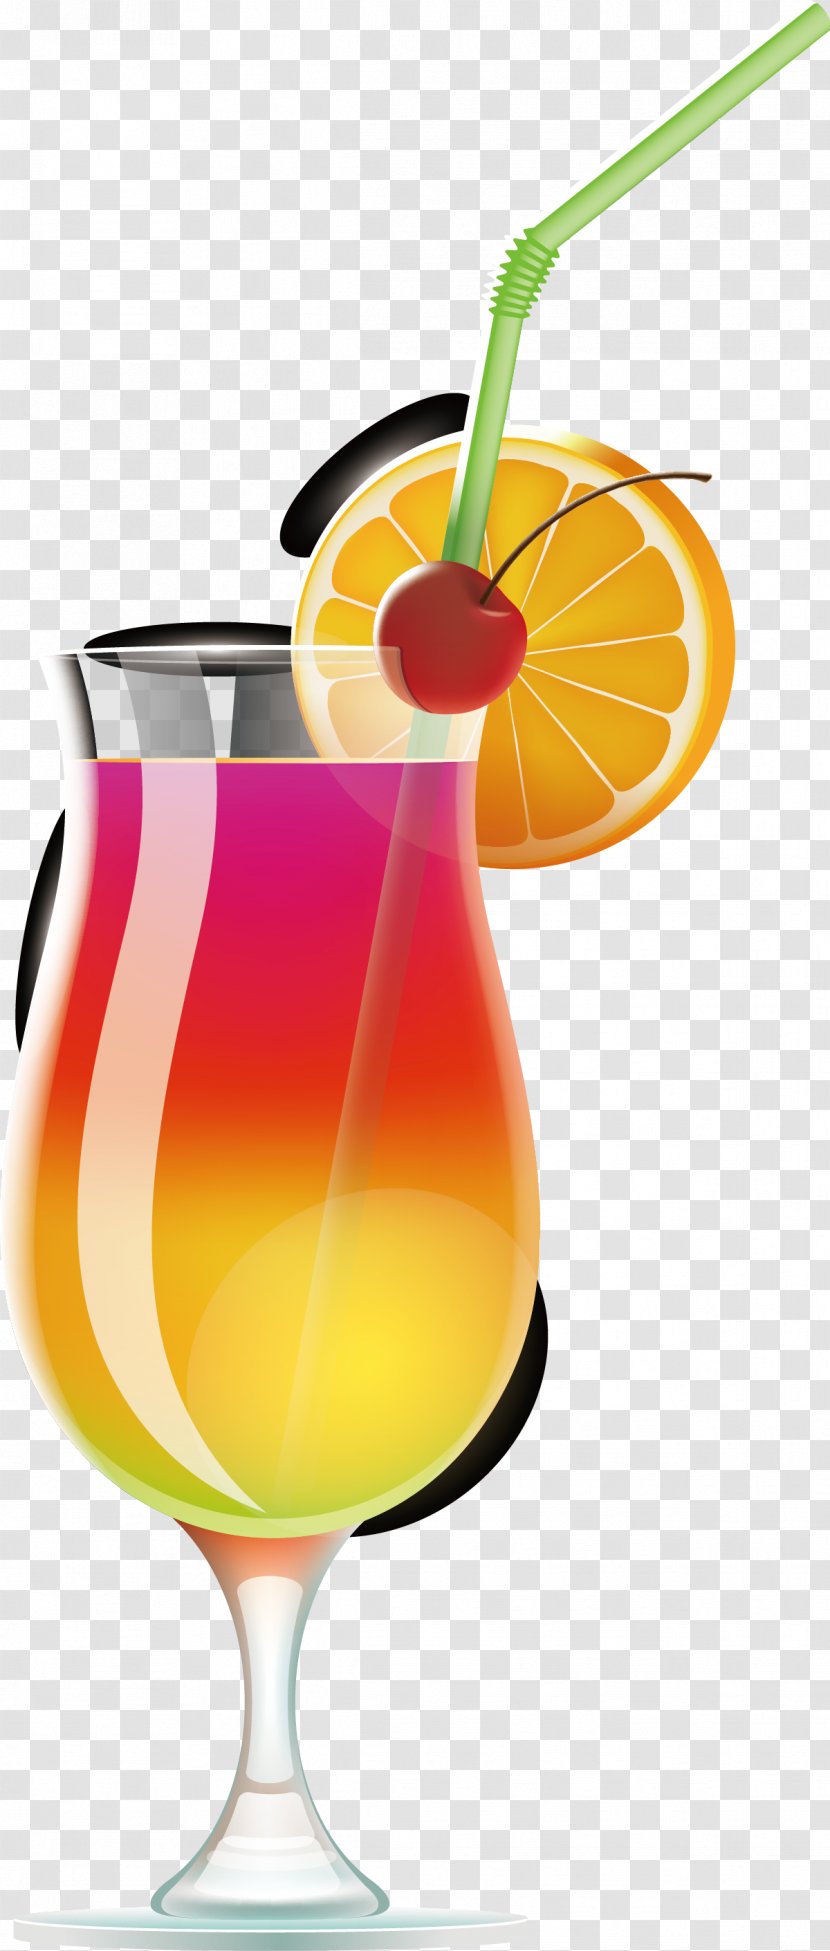 Wine Cocktail Juice Tequila Sunrise Margarita - Drink - Summer Drinks Vector Transparent PNG